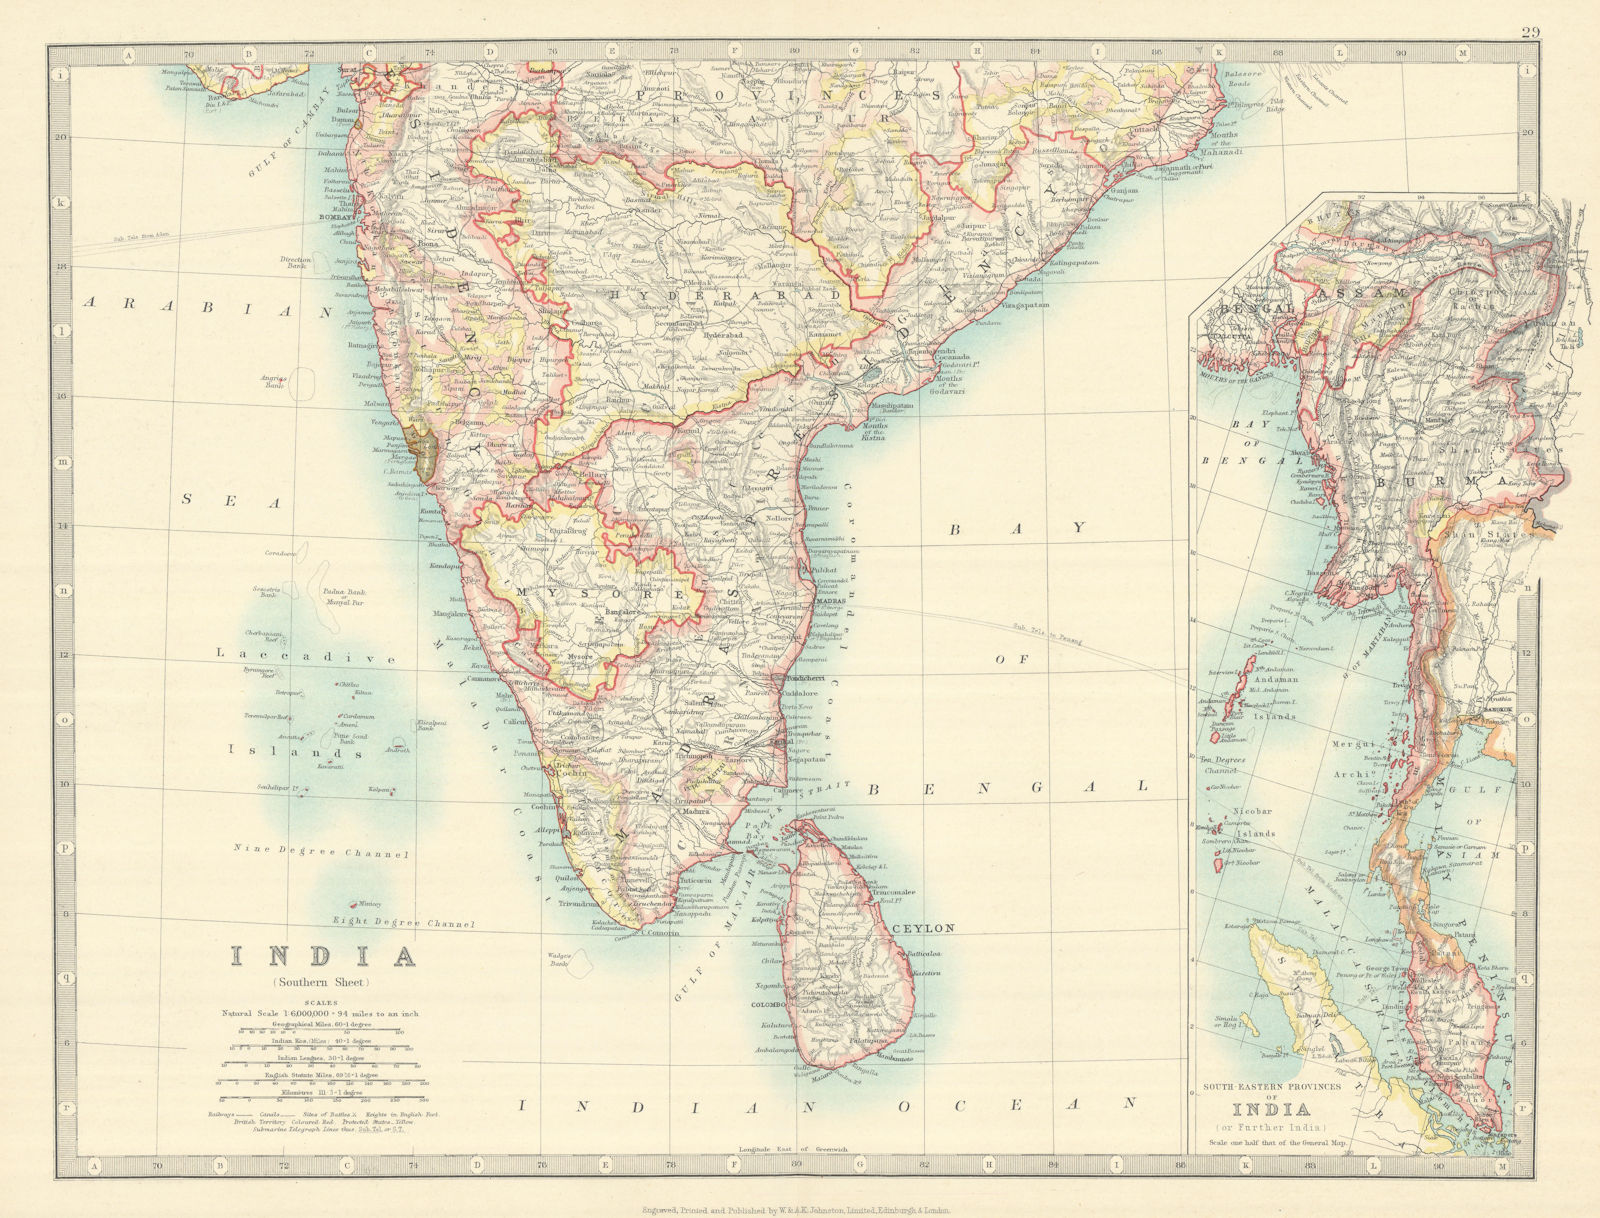 SOUTH BRITISH INDIA & BURMA with battlefields & dates. Ceylon. JOHNSTON 1913 map